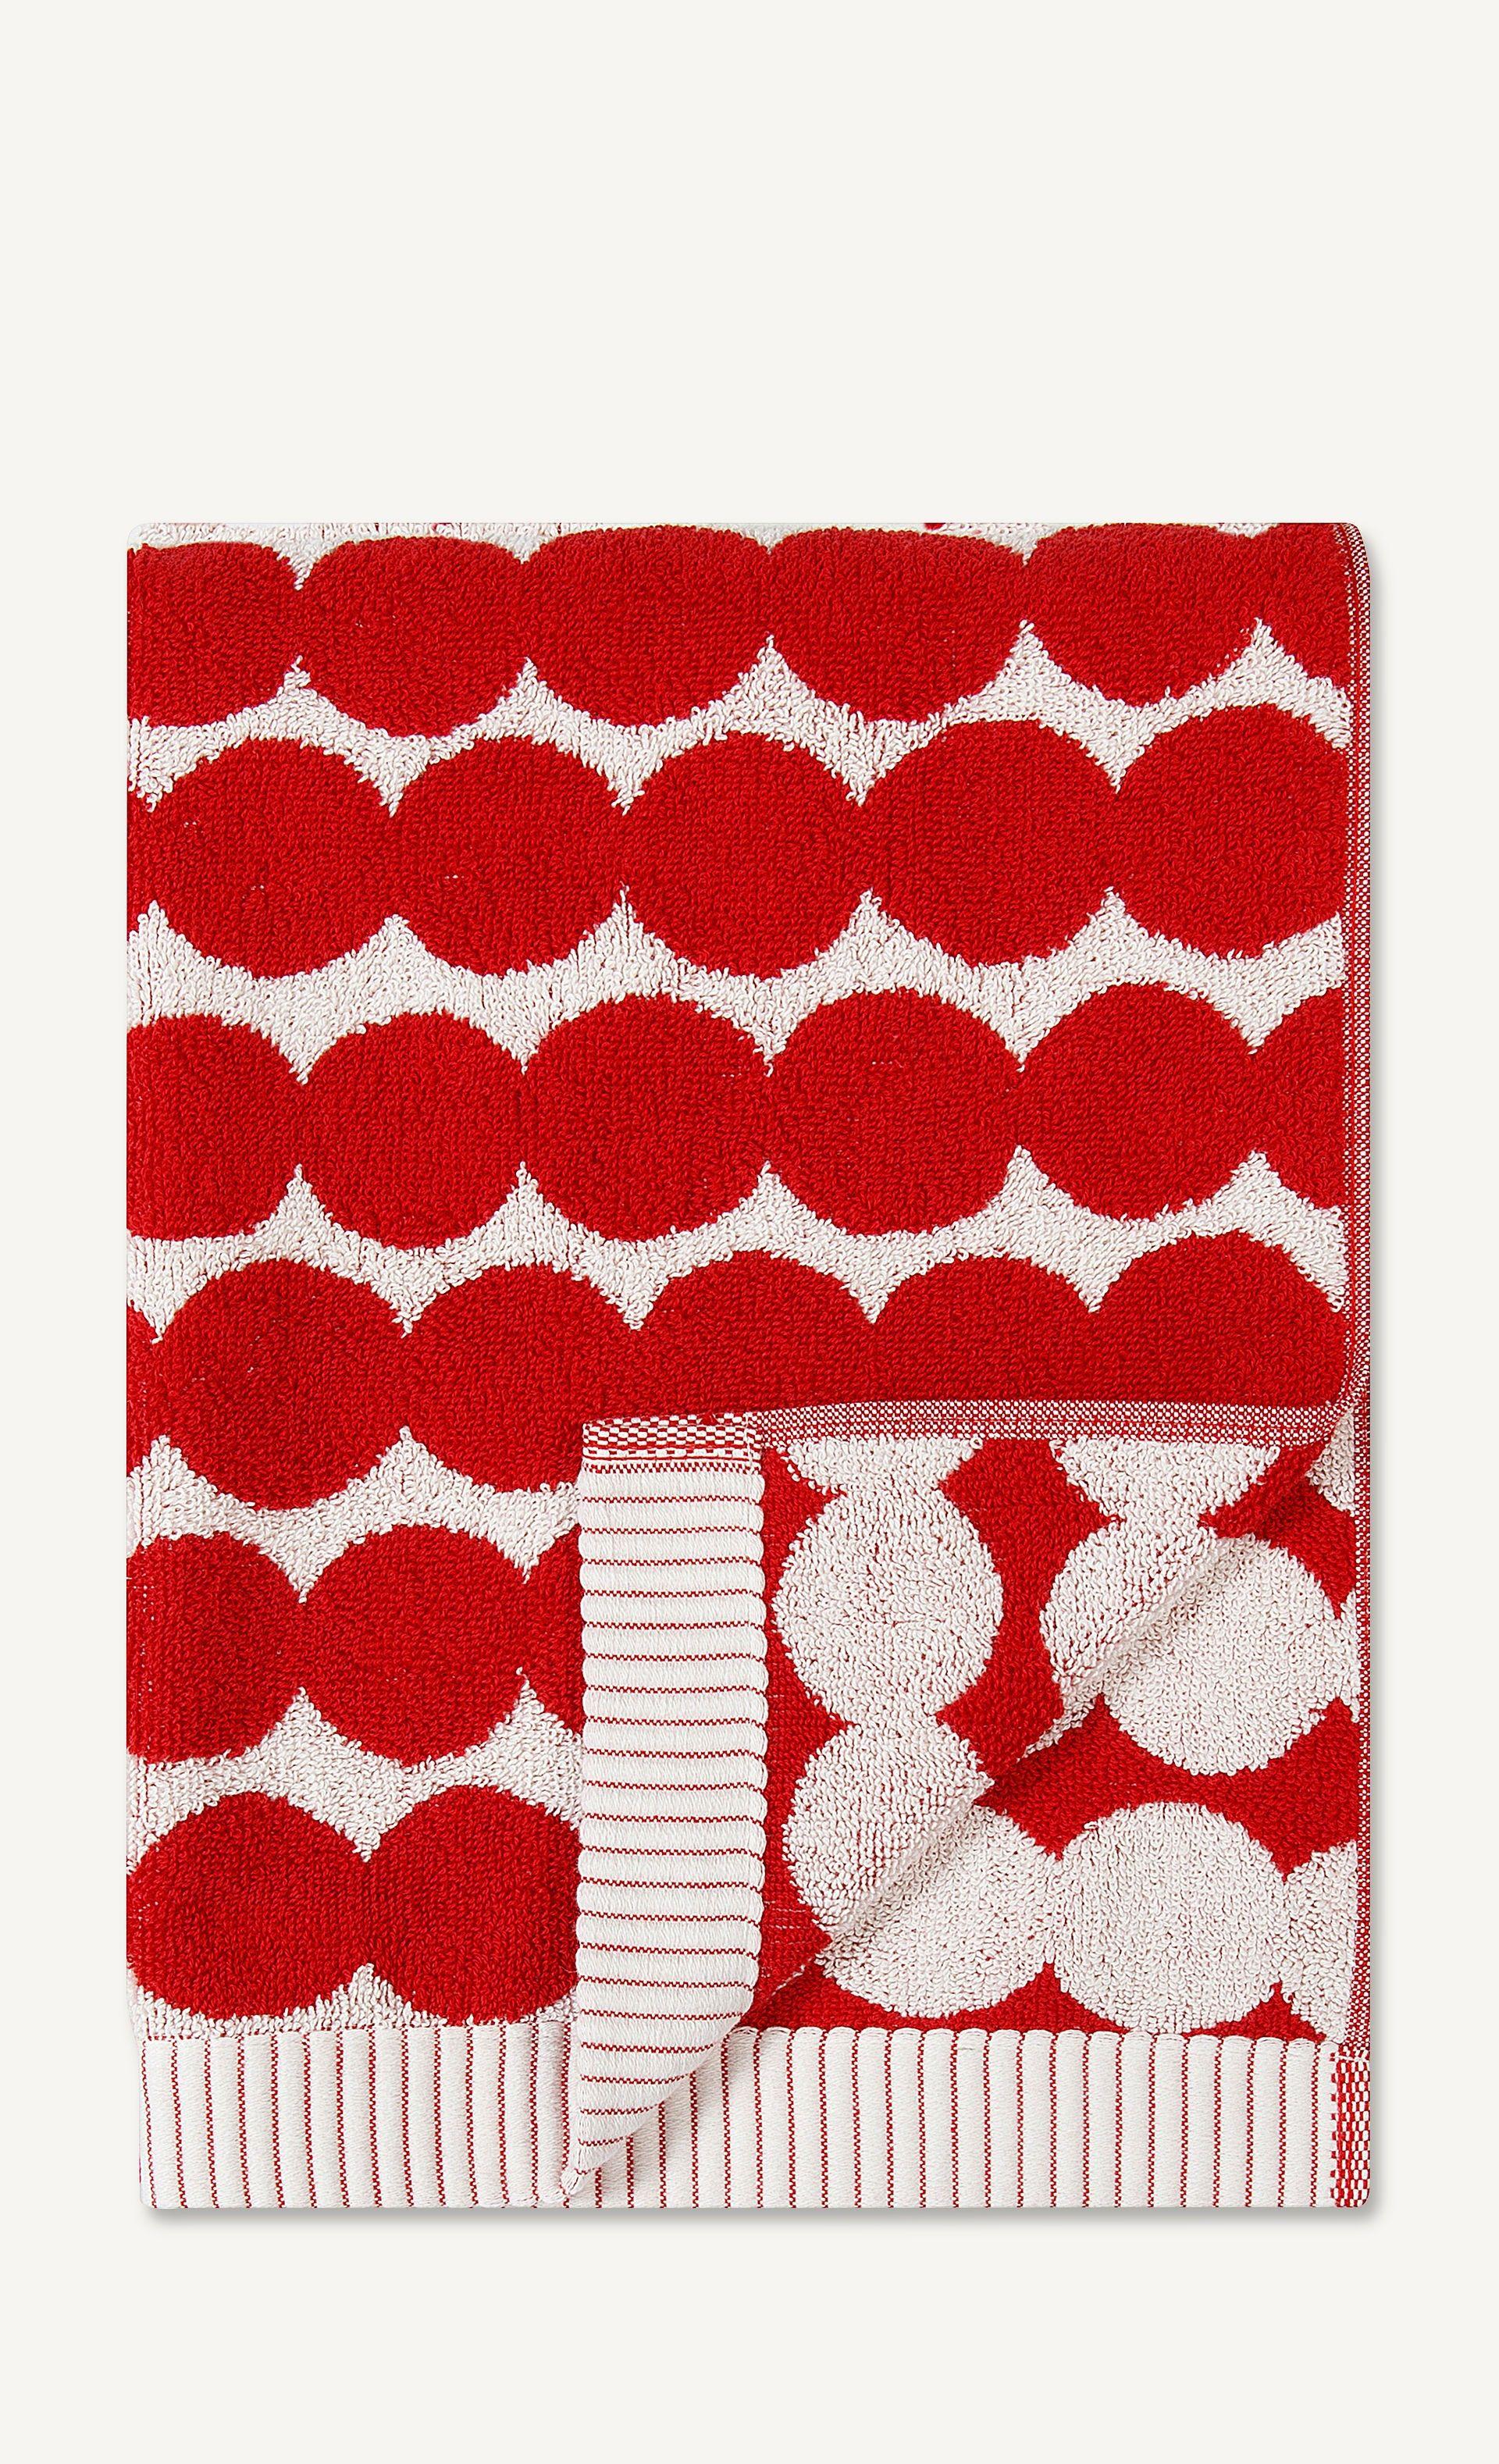 White and Red Hand Logo - Räsymatto hand towel 50x100 cm - white, red - Marimekko.com